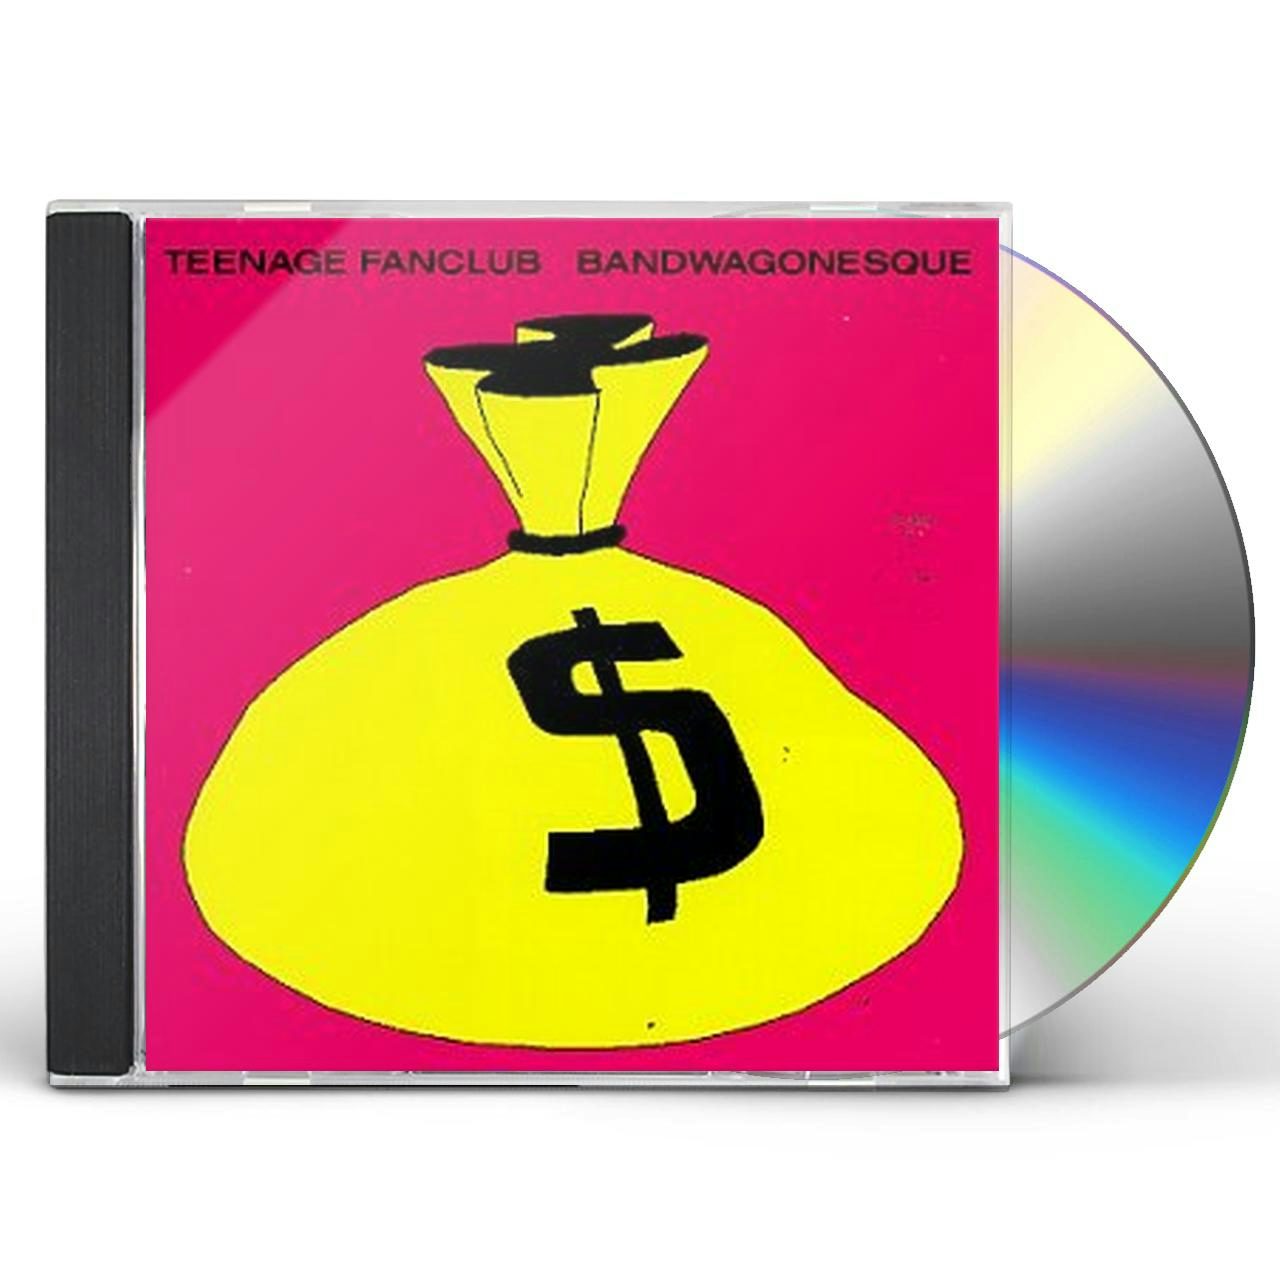 Teenage Fanclub BANDWAGONESQUE CD